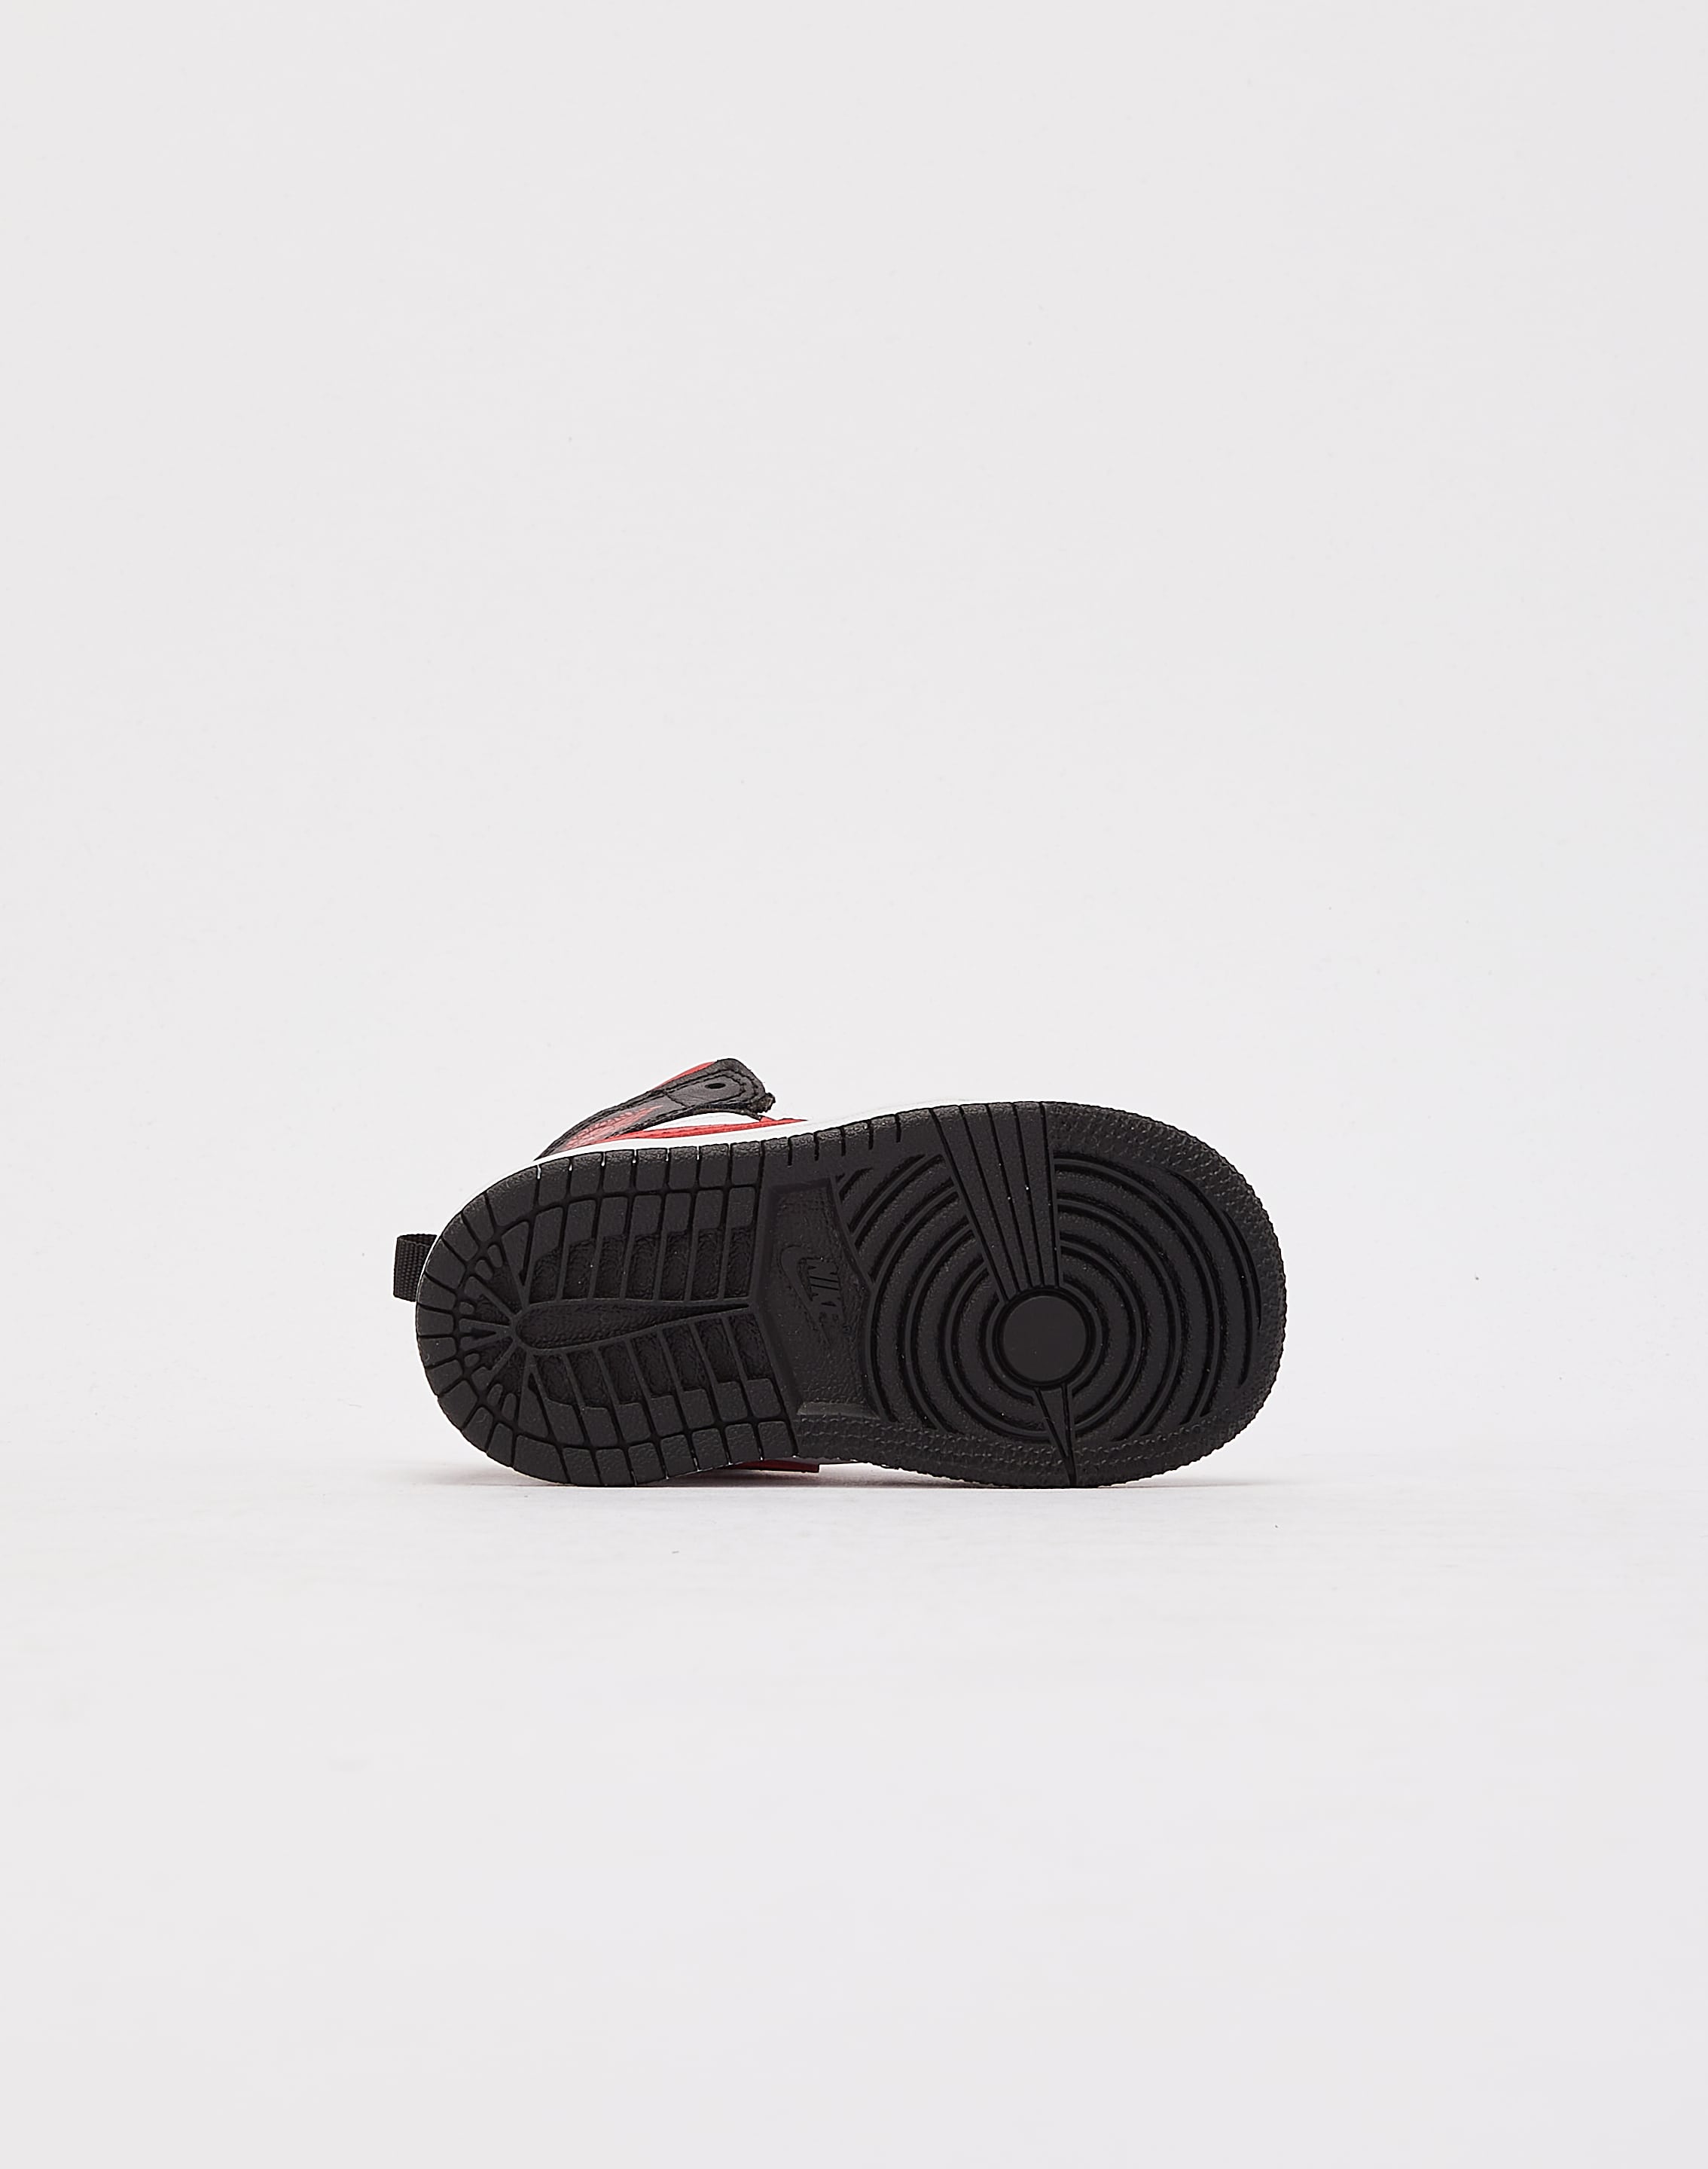 Nike air Mint jordan 1 mid td black fire red white toddler sneakers  640735-079 6c